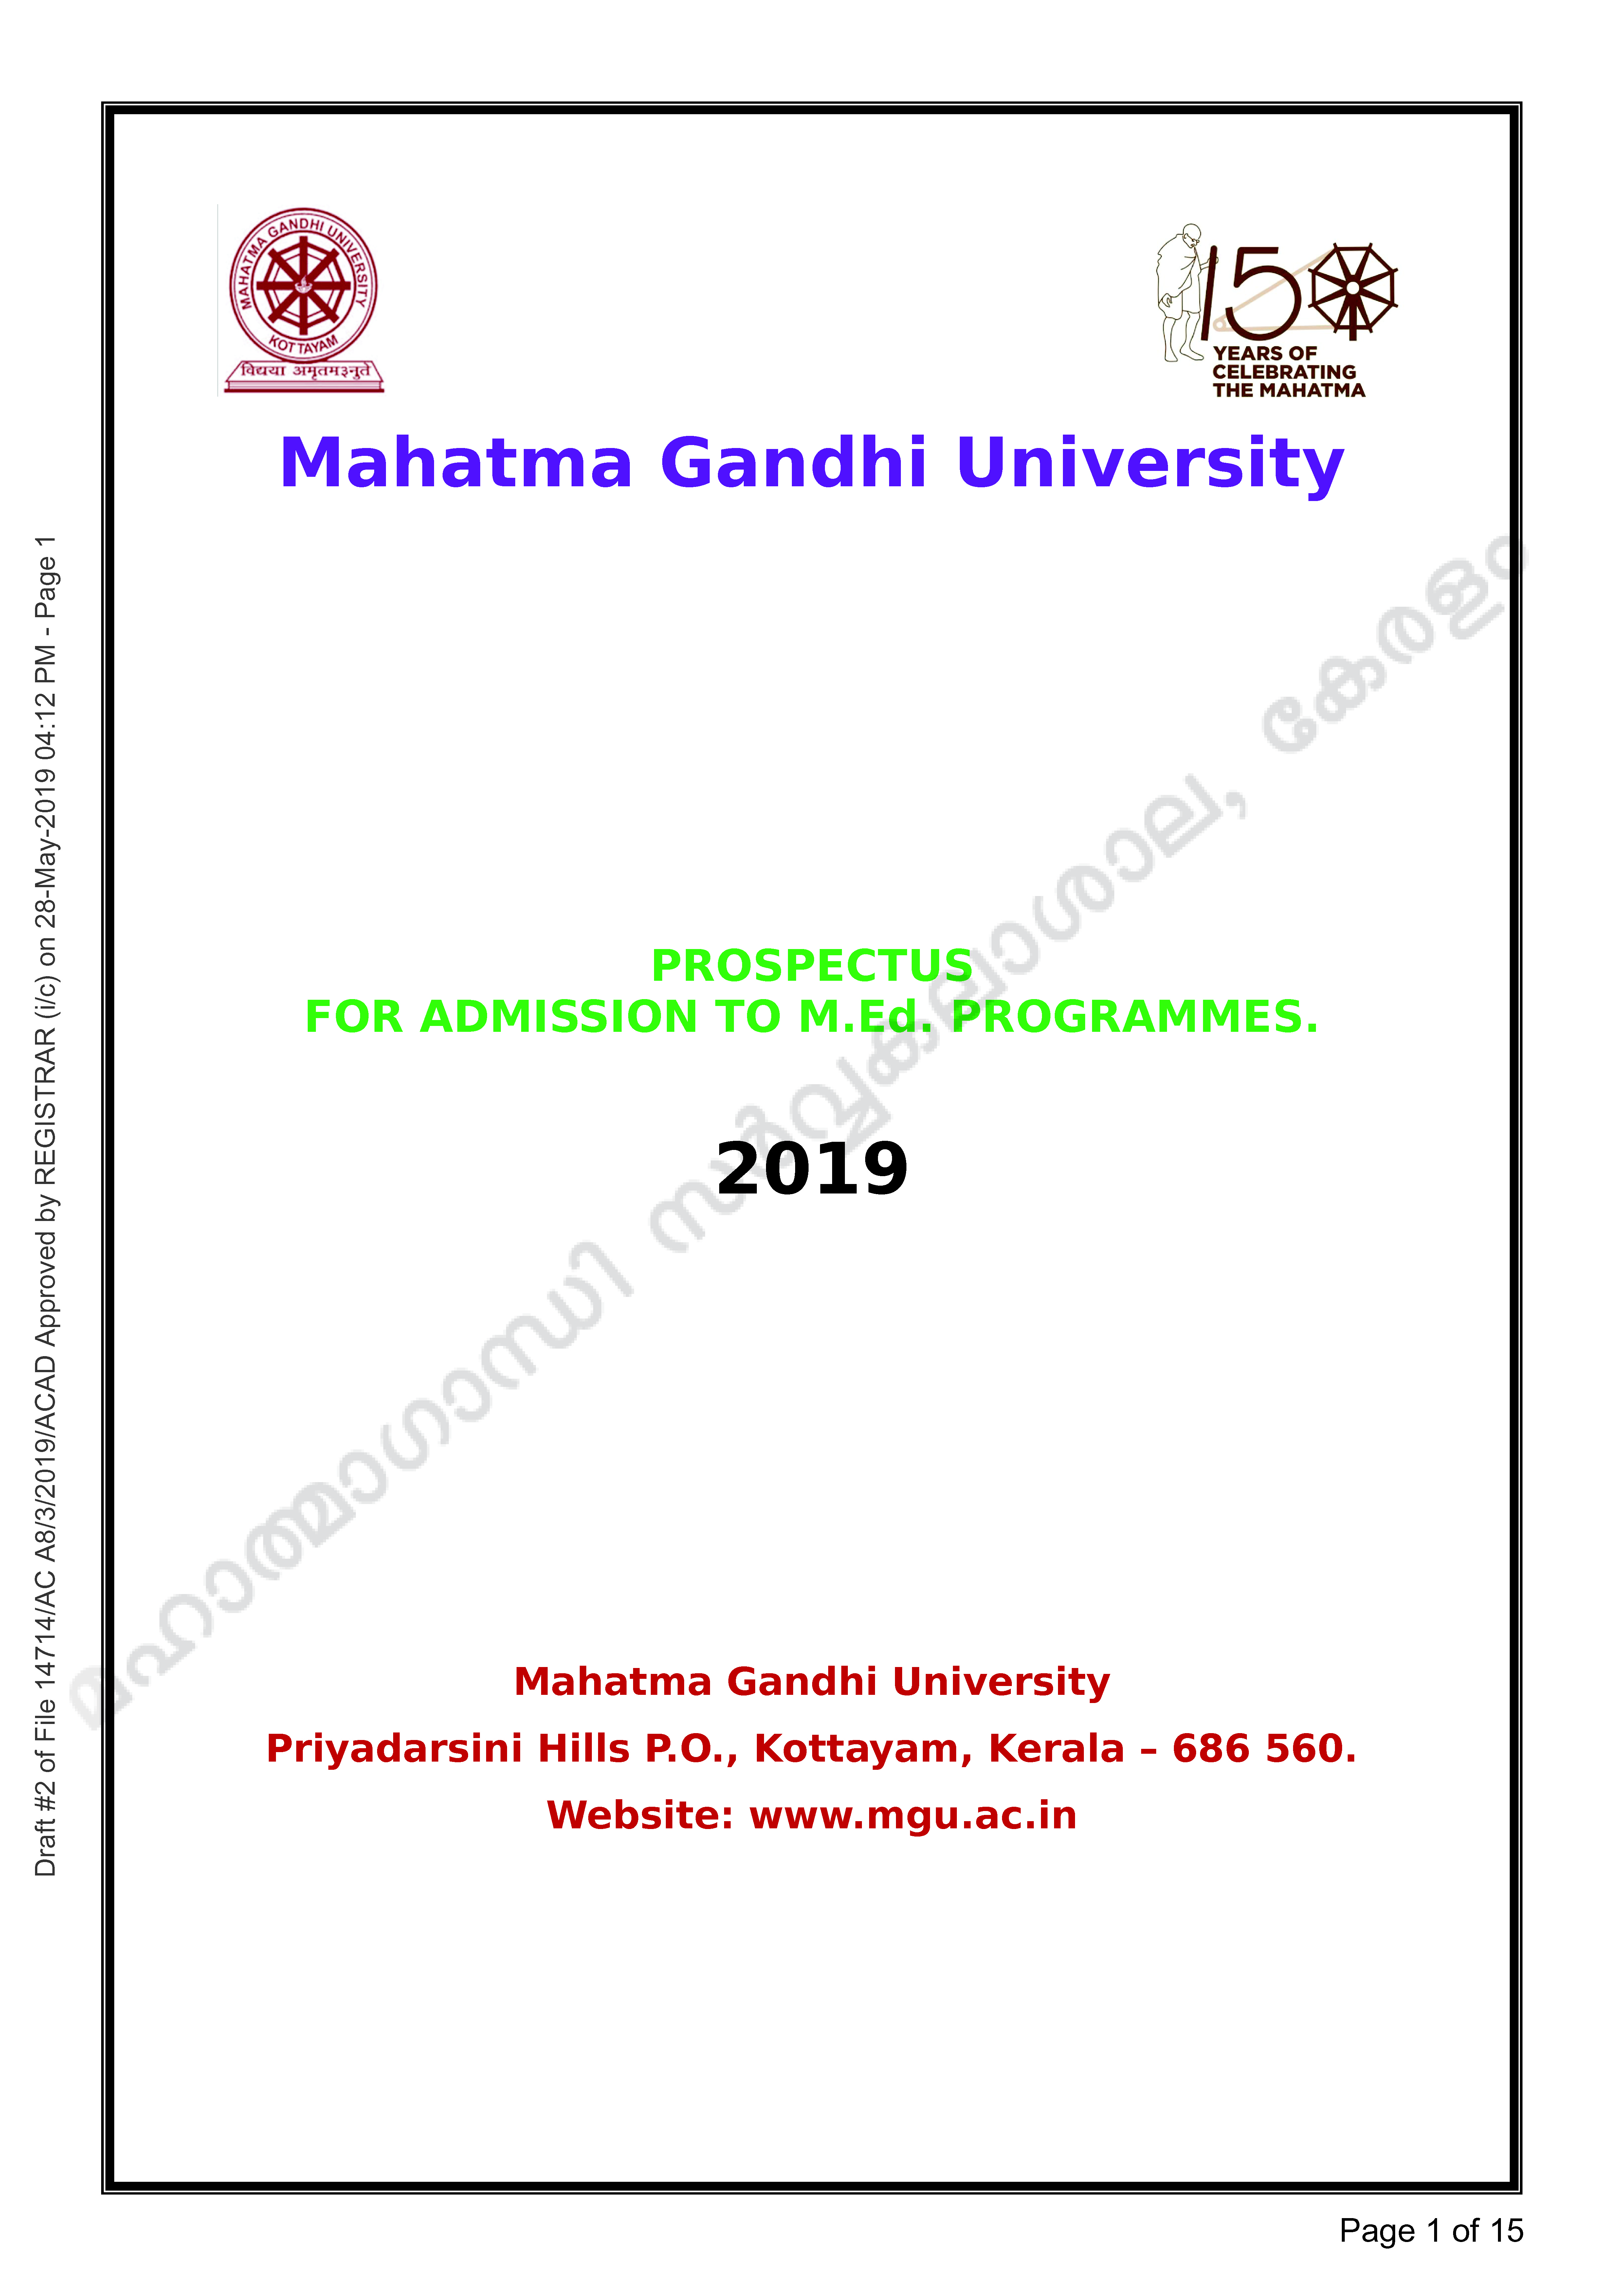 MG University M Ed Prospectus and Application form 2019 2020 - Notification Image 1